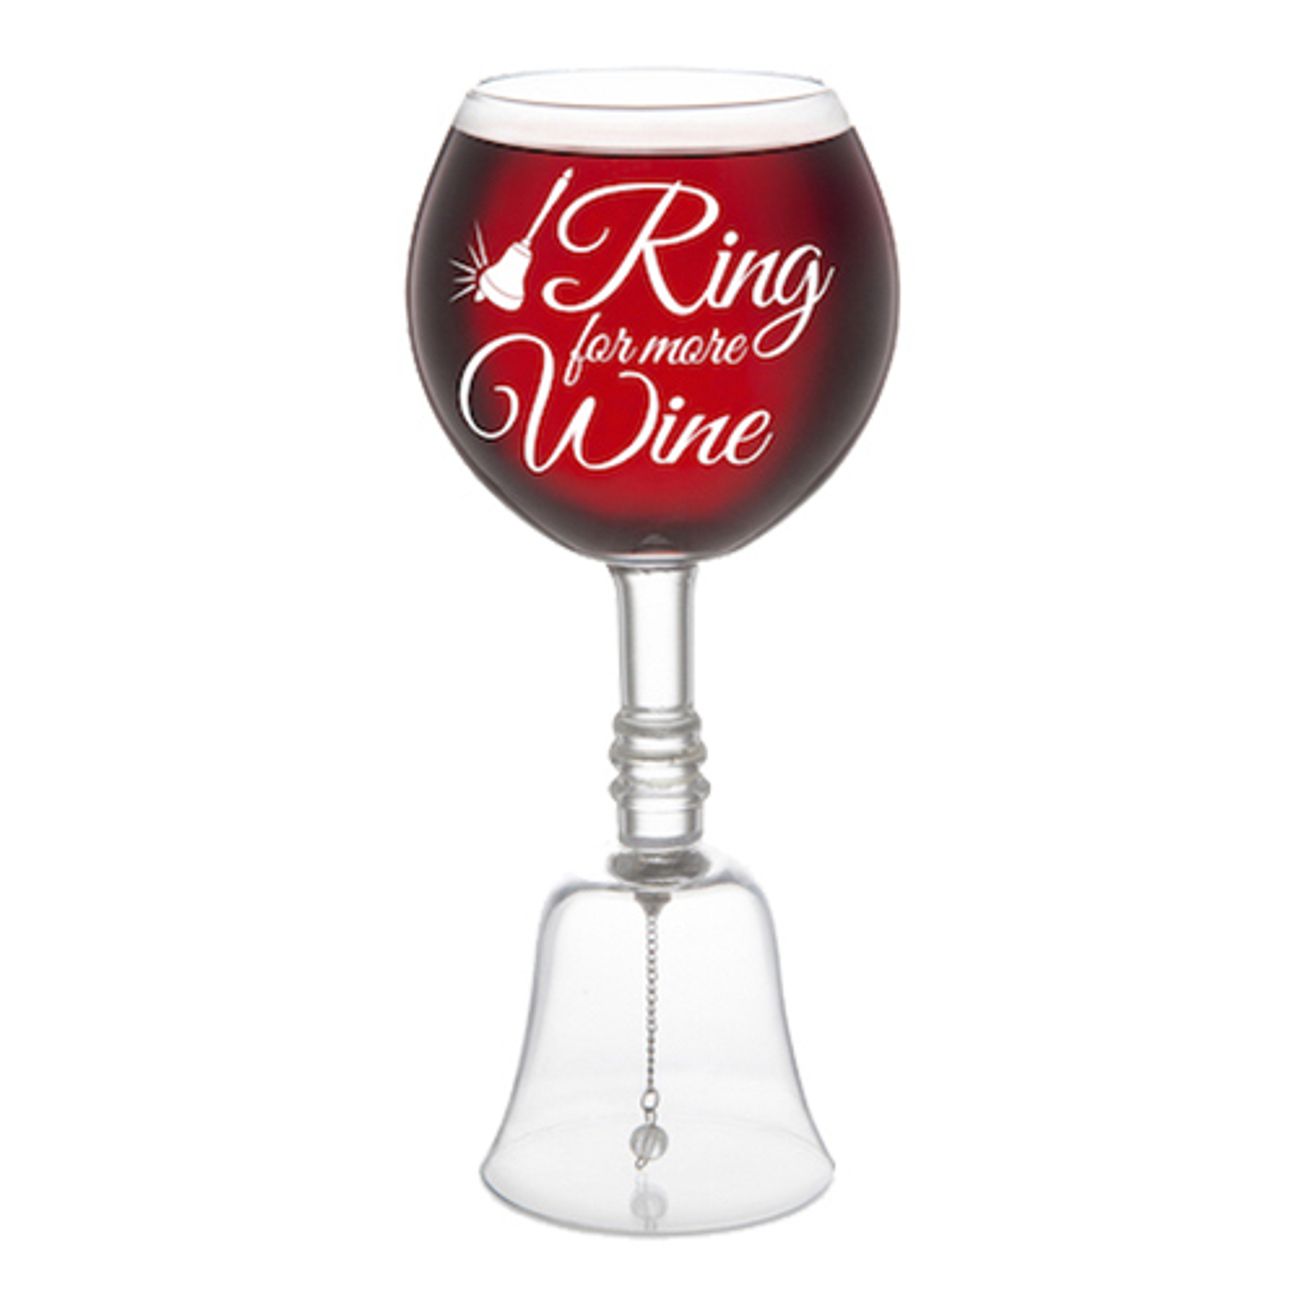 vinglas-ring-for-more-wine-1